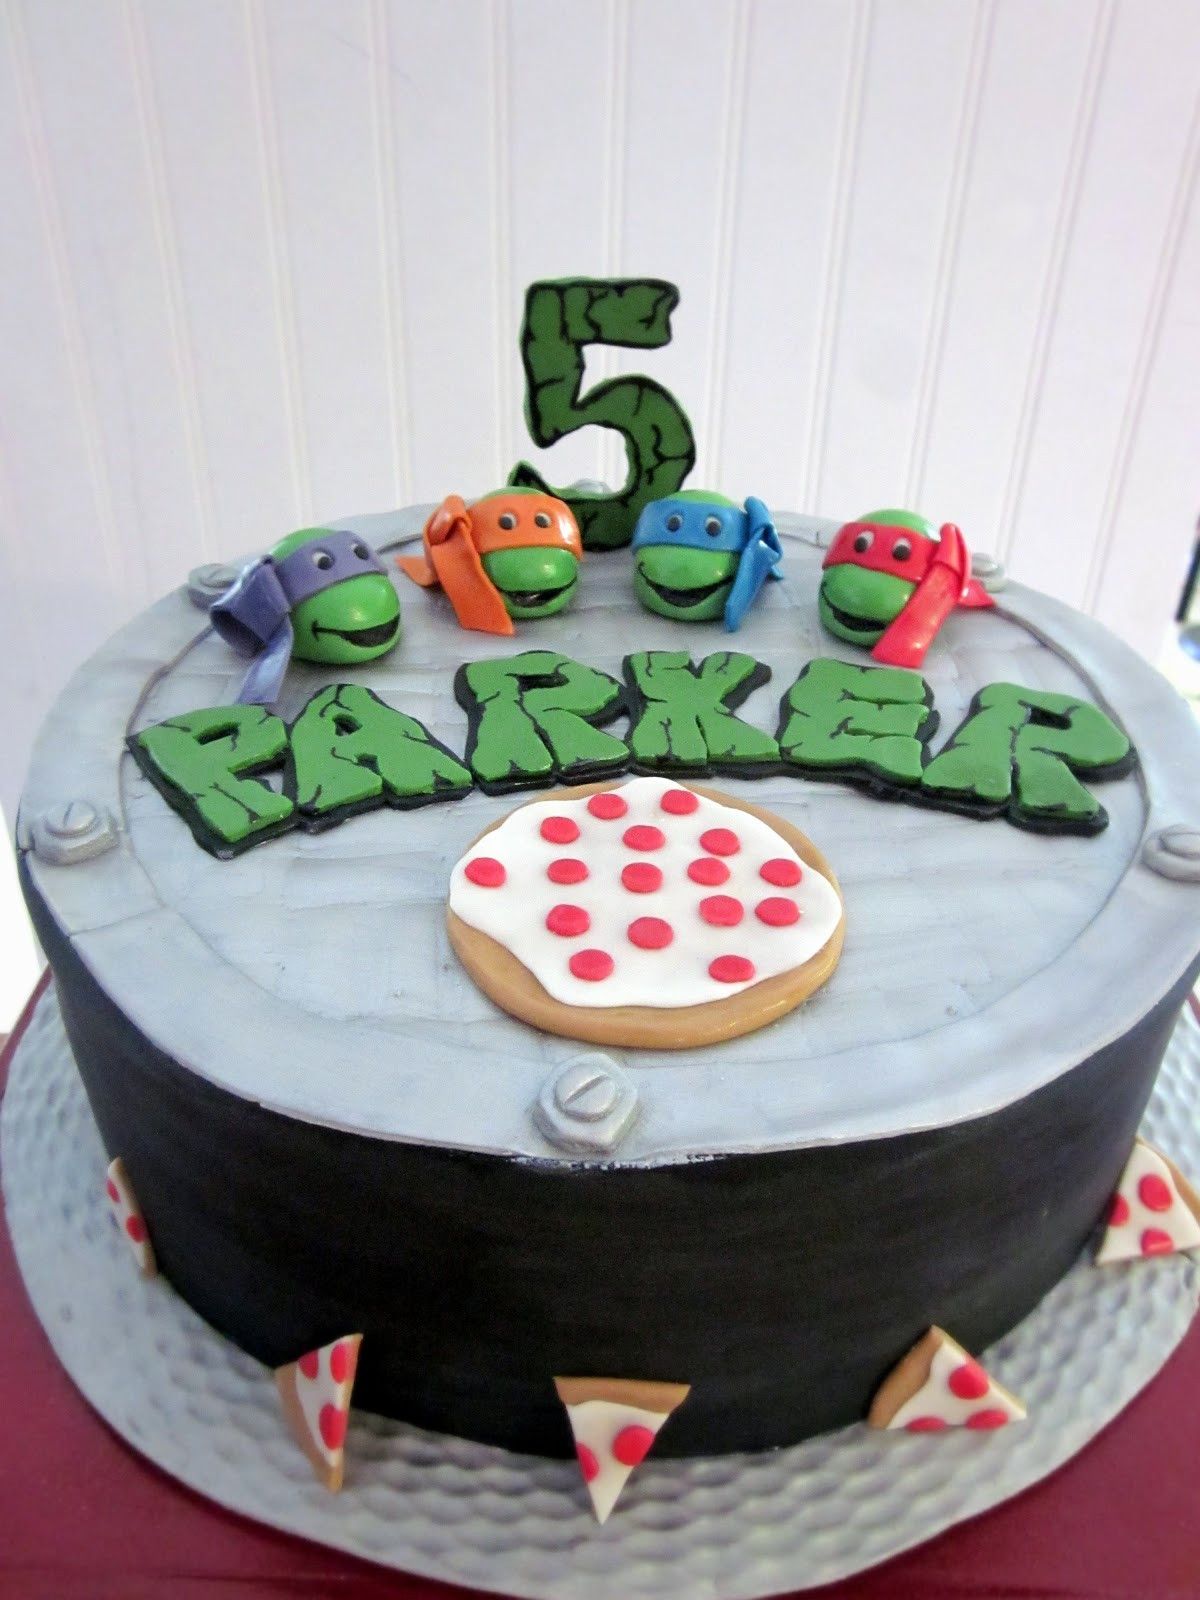 Best ideas about Ninja Turtles Birthday Cake
. Save or Pin Darlin Designs Teenage Mutant Ninja Turtle Birthday Cake Now.